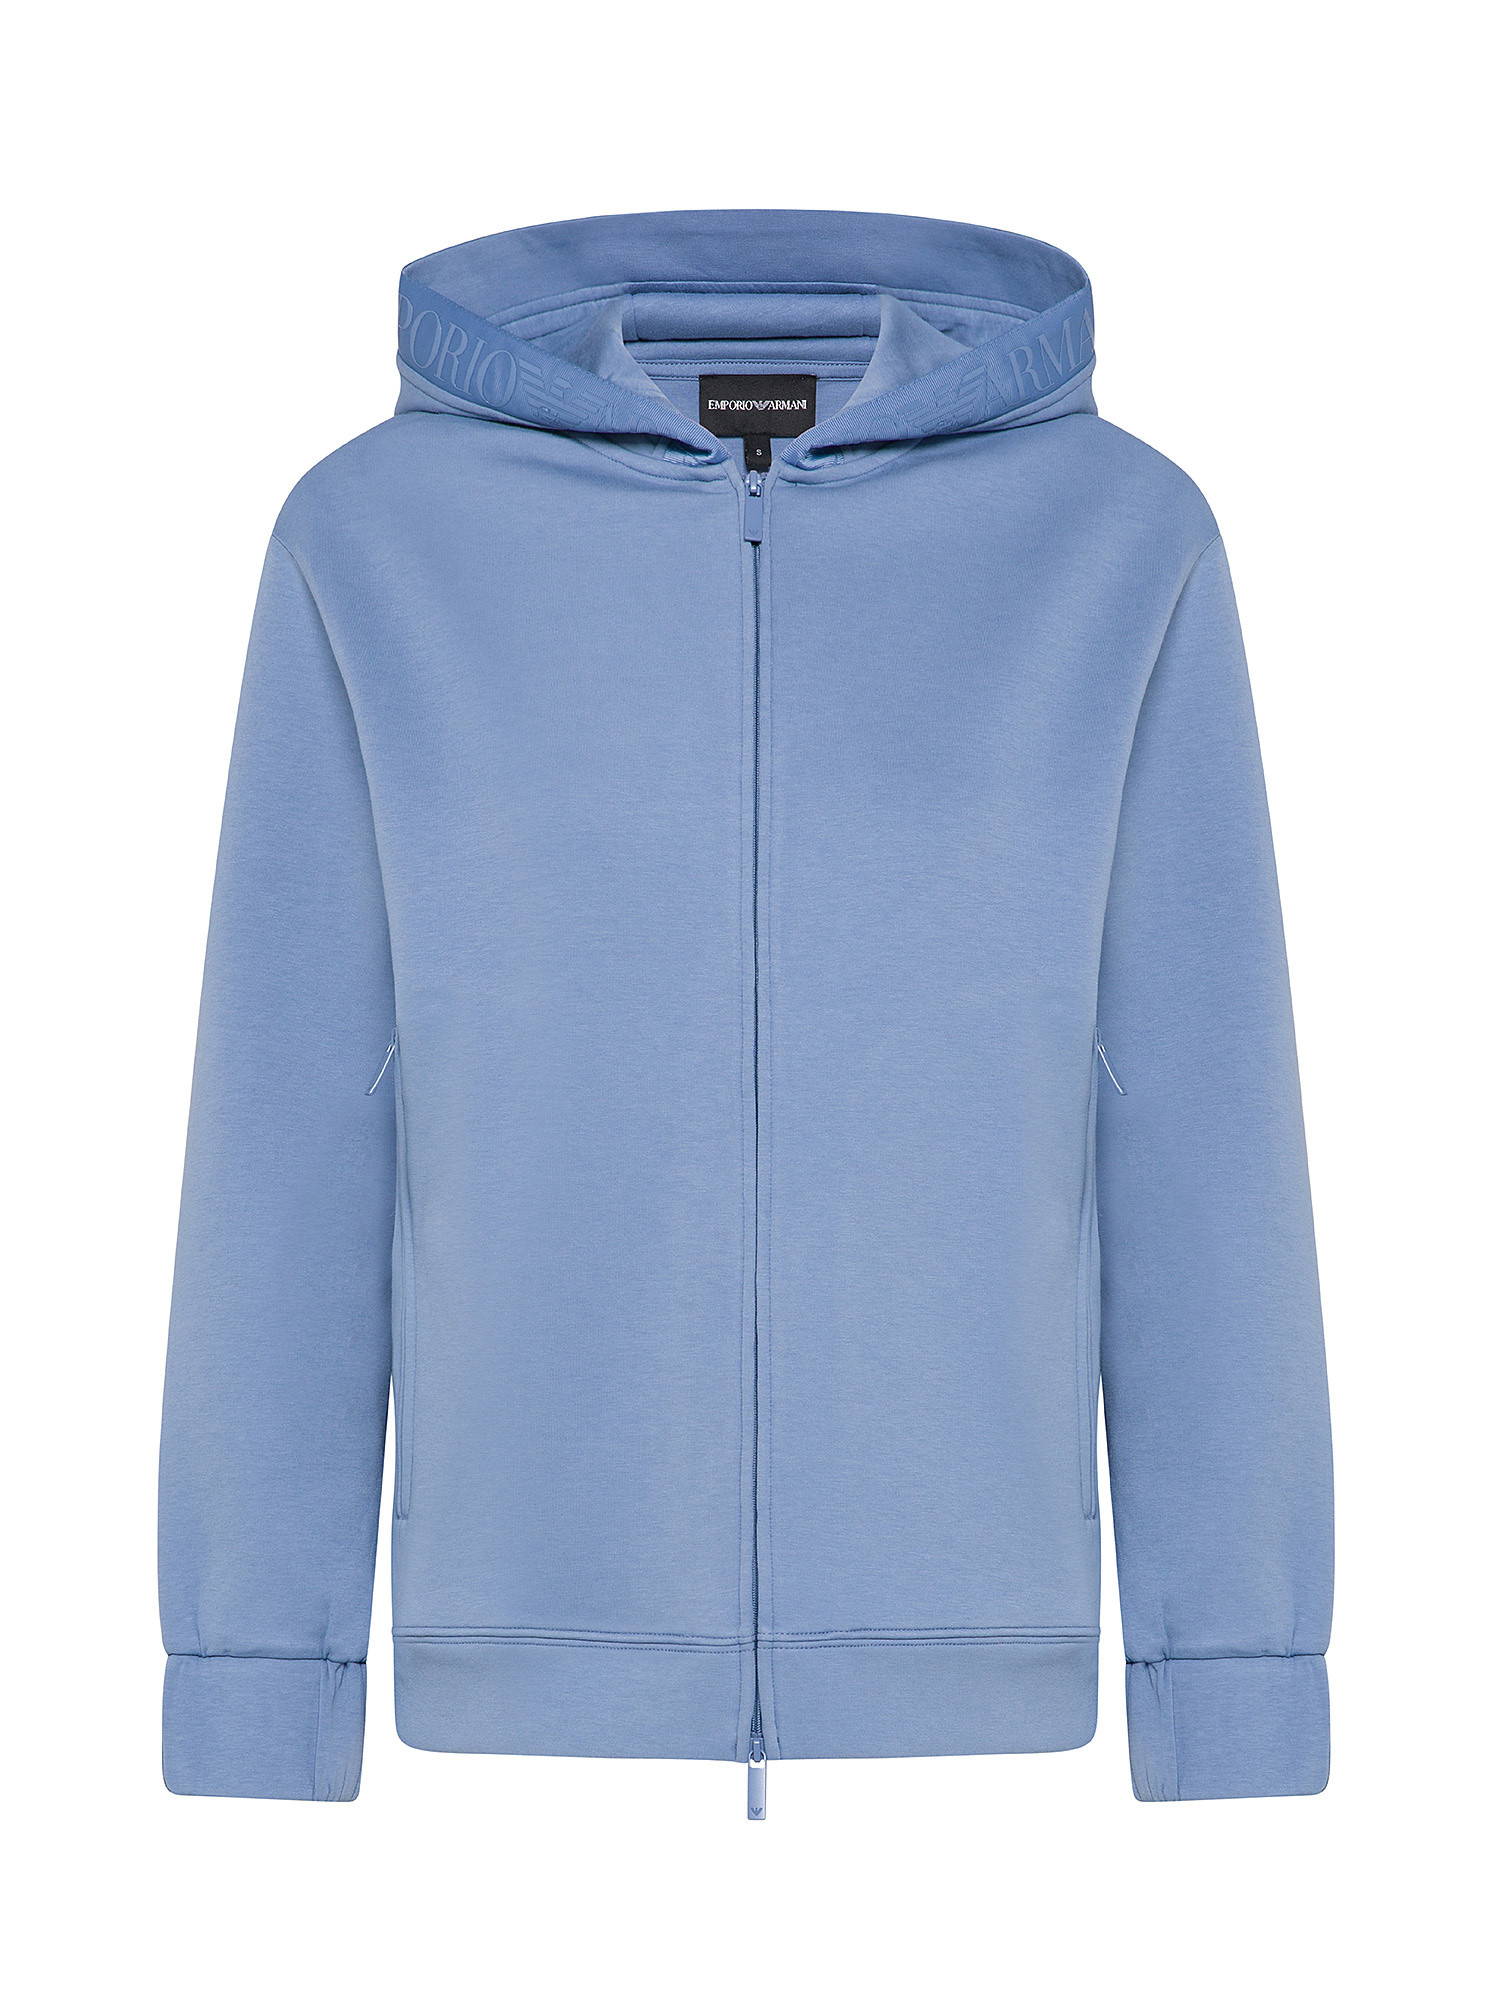 Emporio Armani - Full zip sweatshirt with hood and logo tape, Light Blue, large image number 0